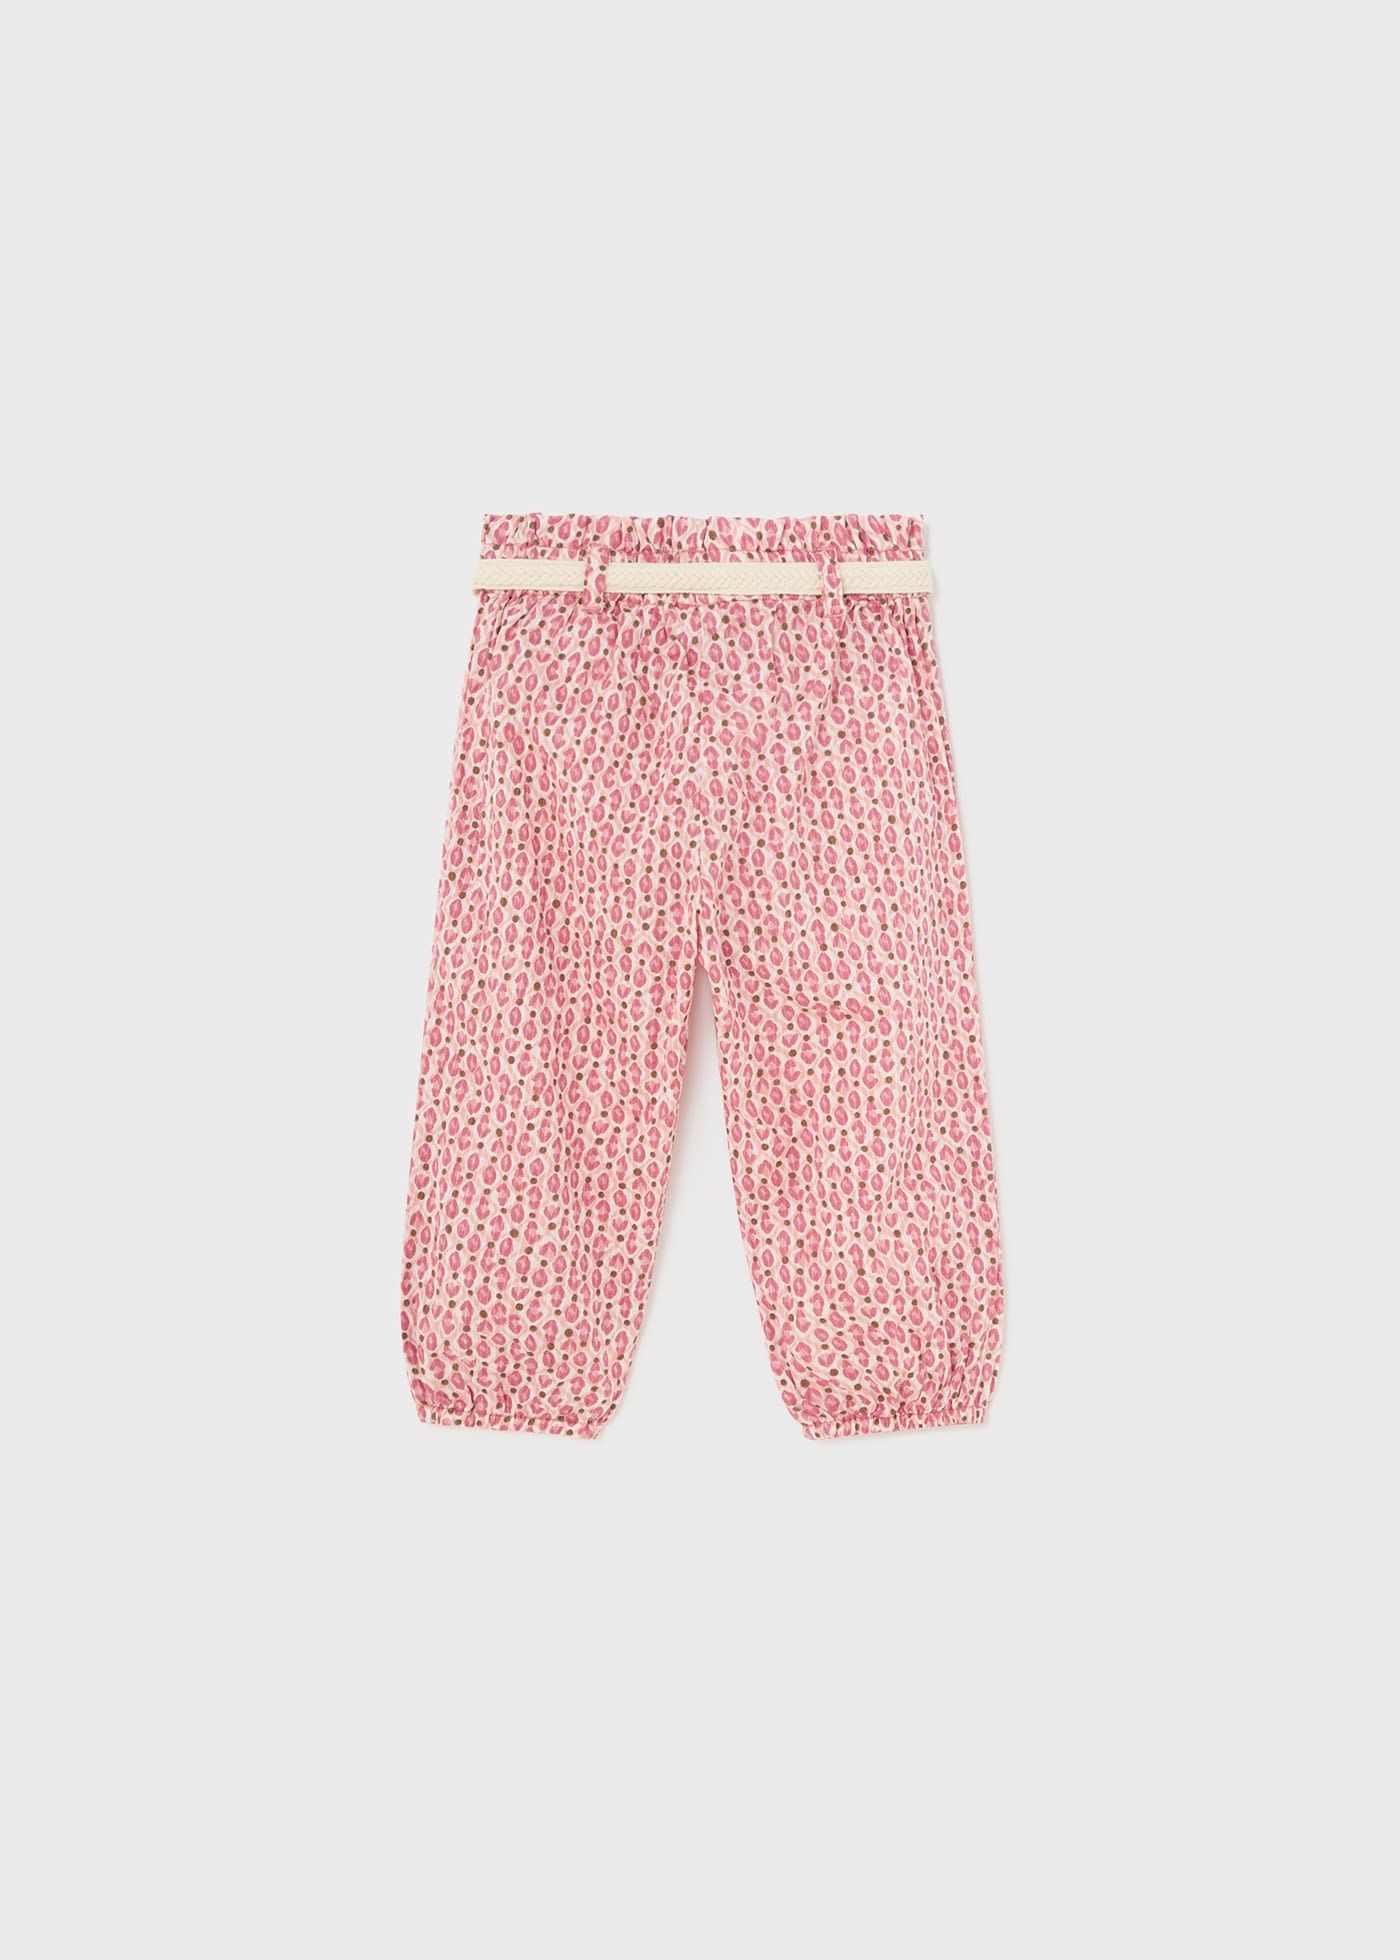 Pantalone largo con cinta neonata